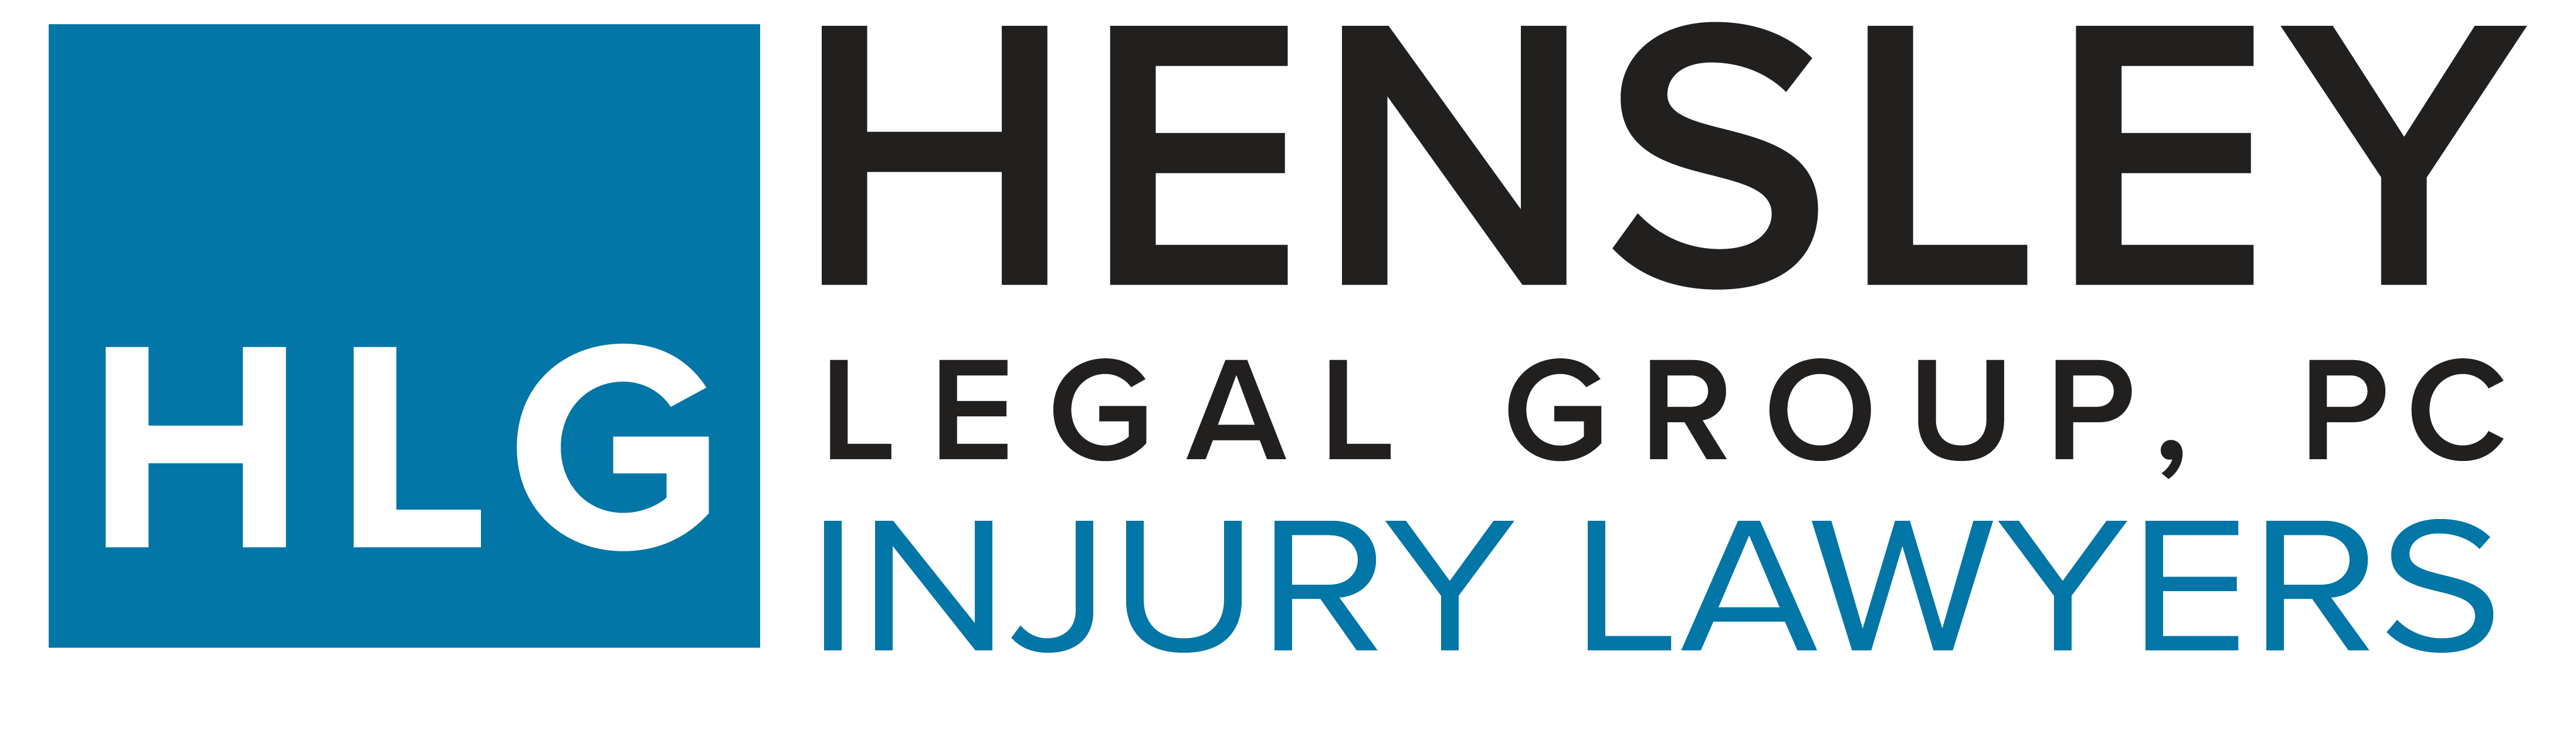 Hensley Legal Group, PC logo